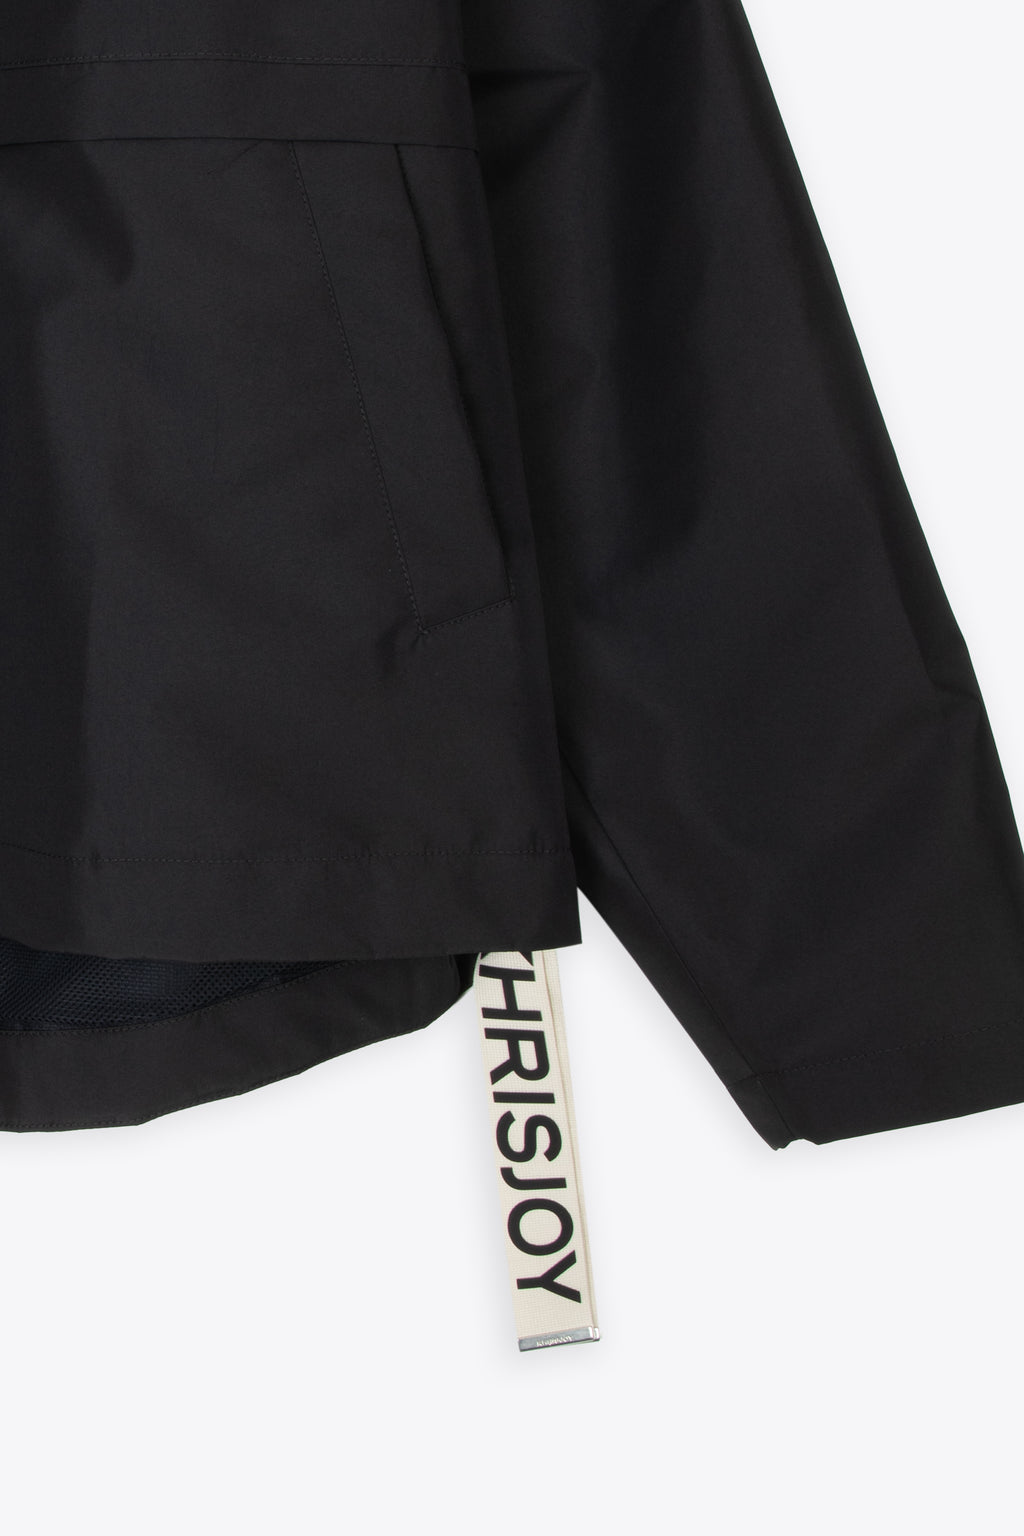 alt-image__Black-nylon-windproof-hooded-jacket---Shell-Windbreaker